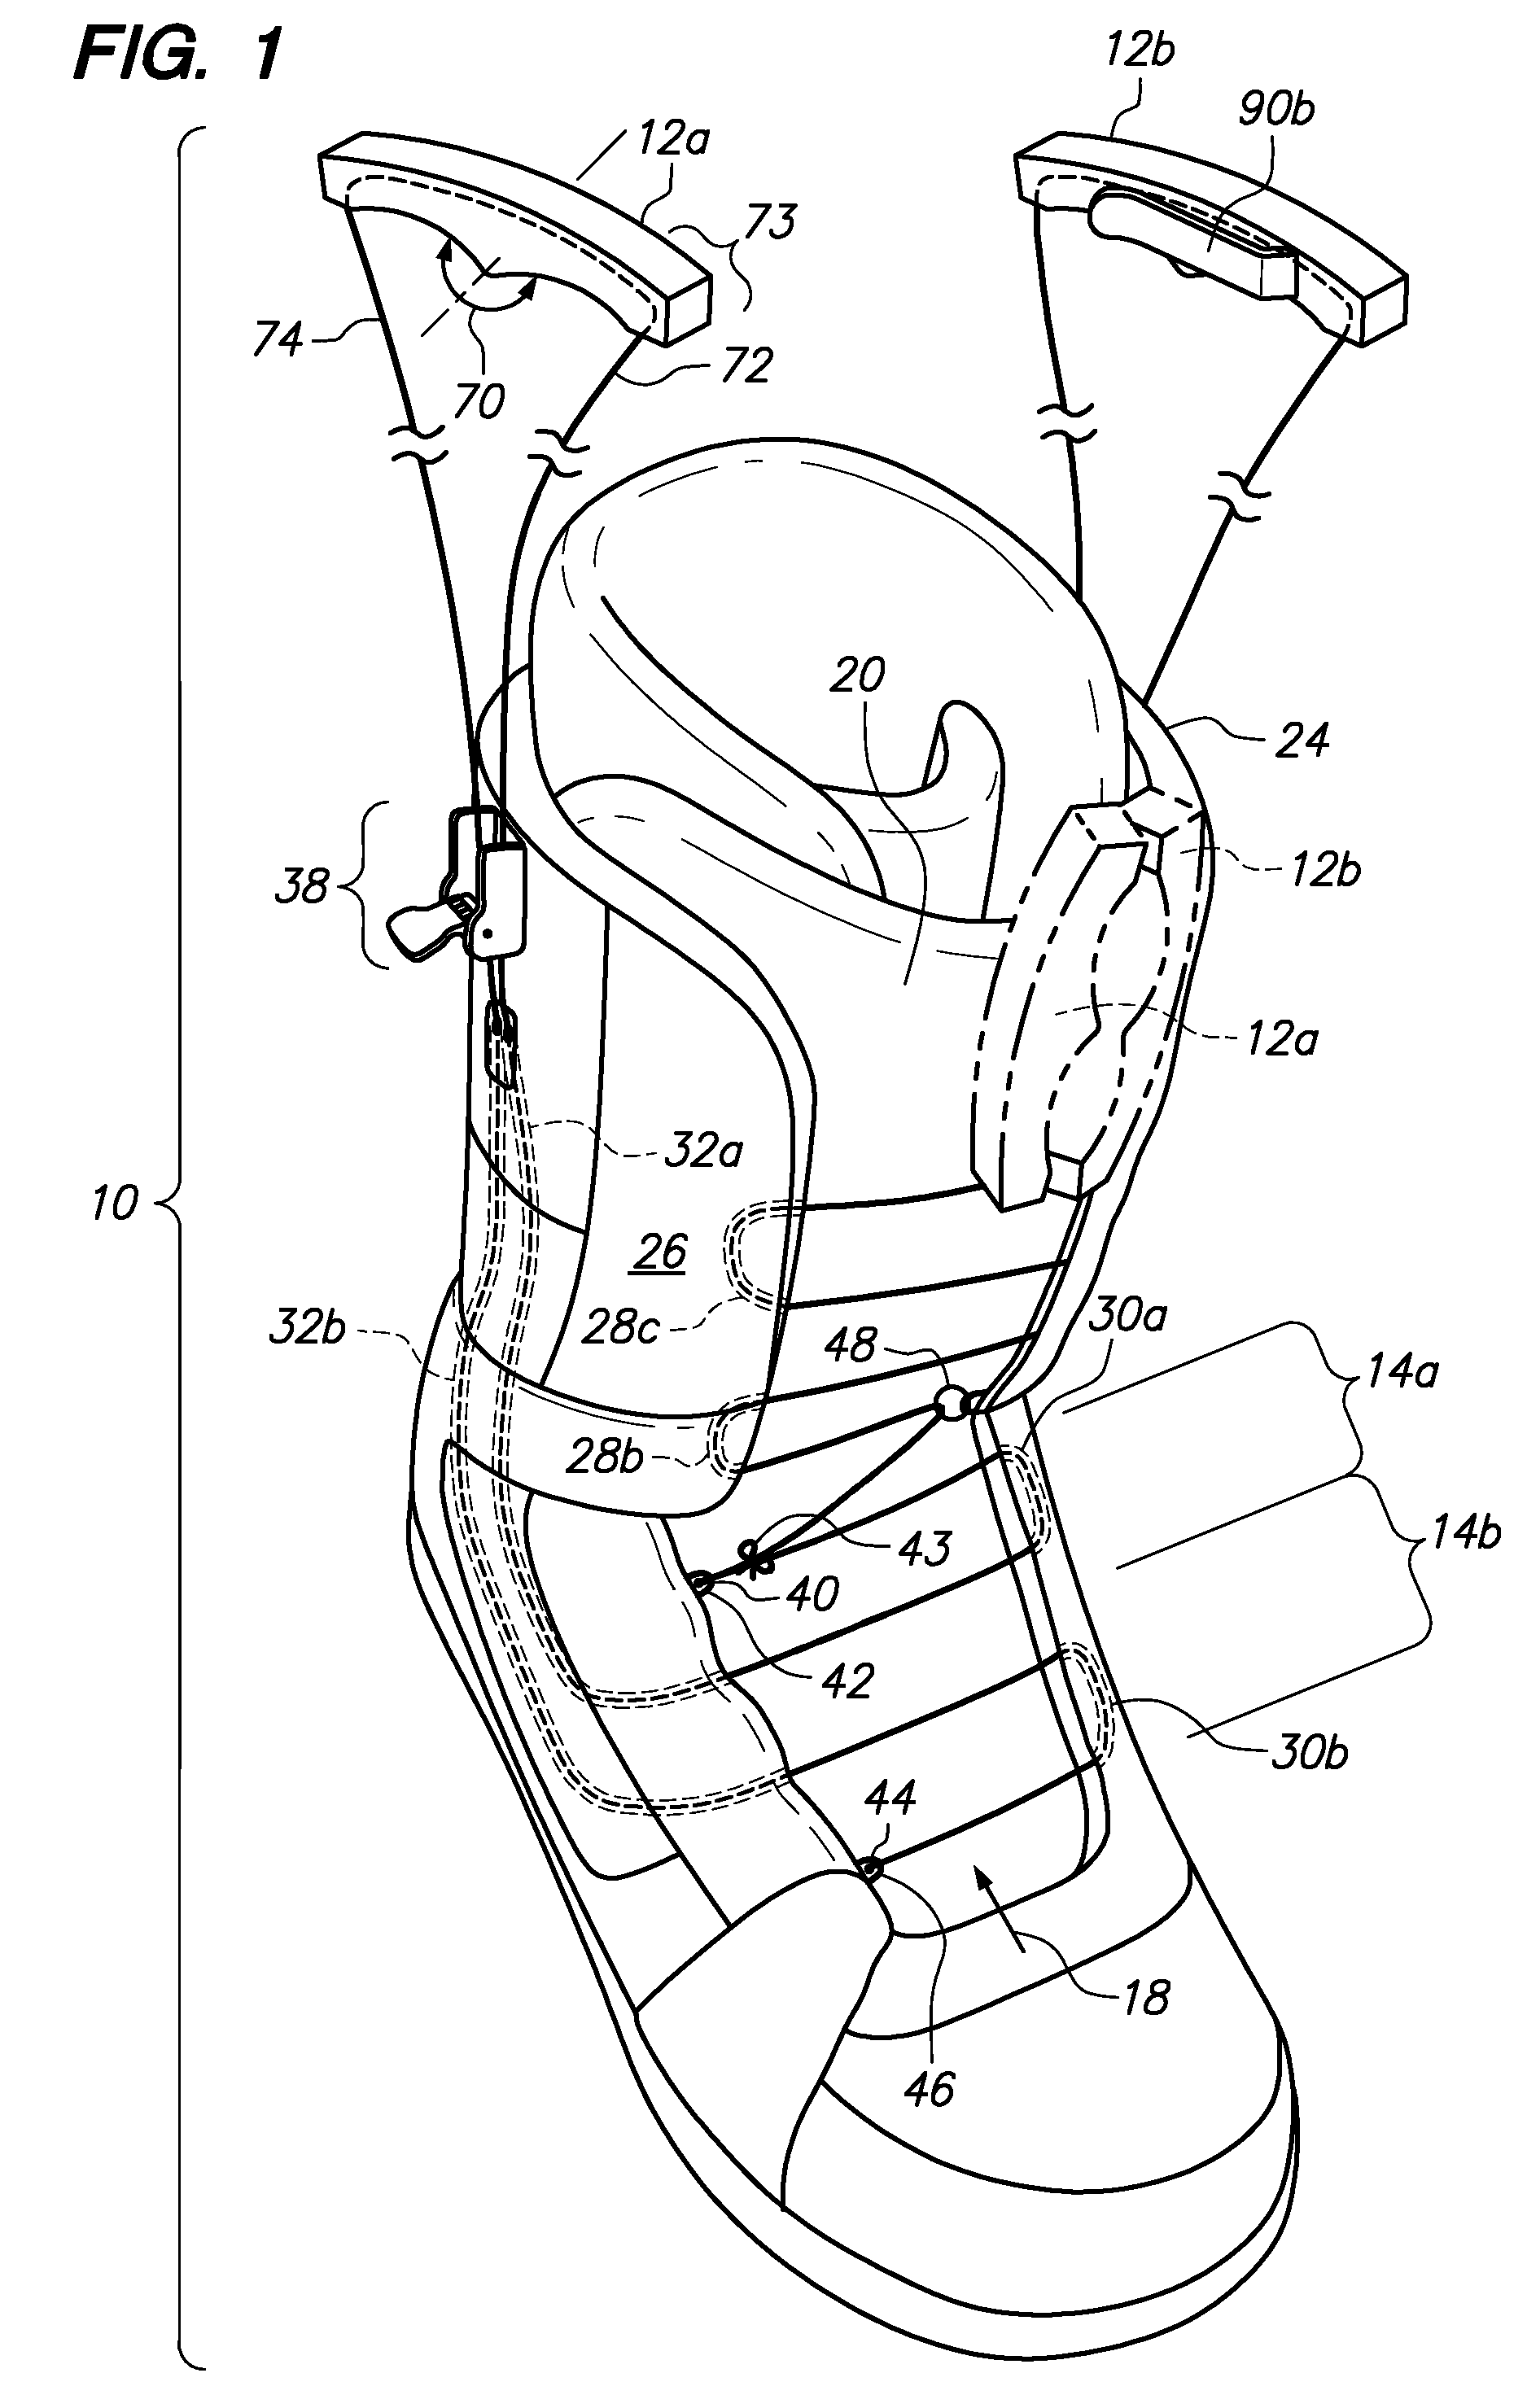 Footwear lacing system